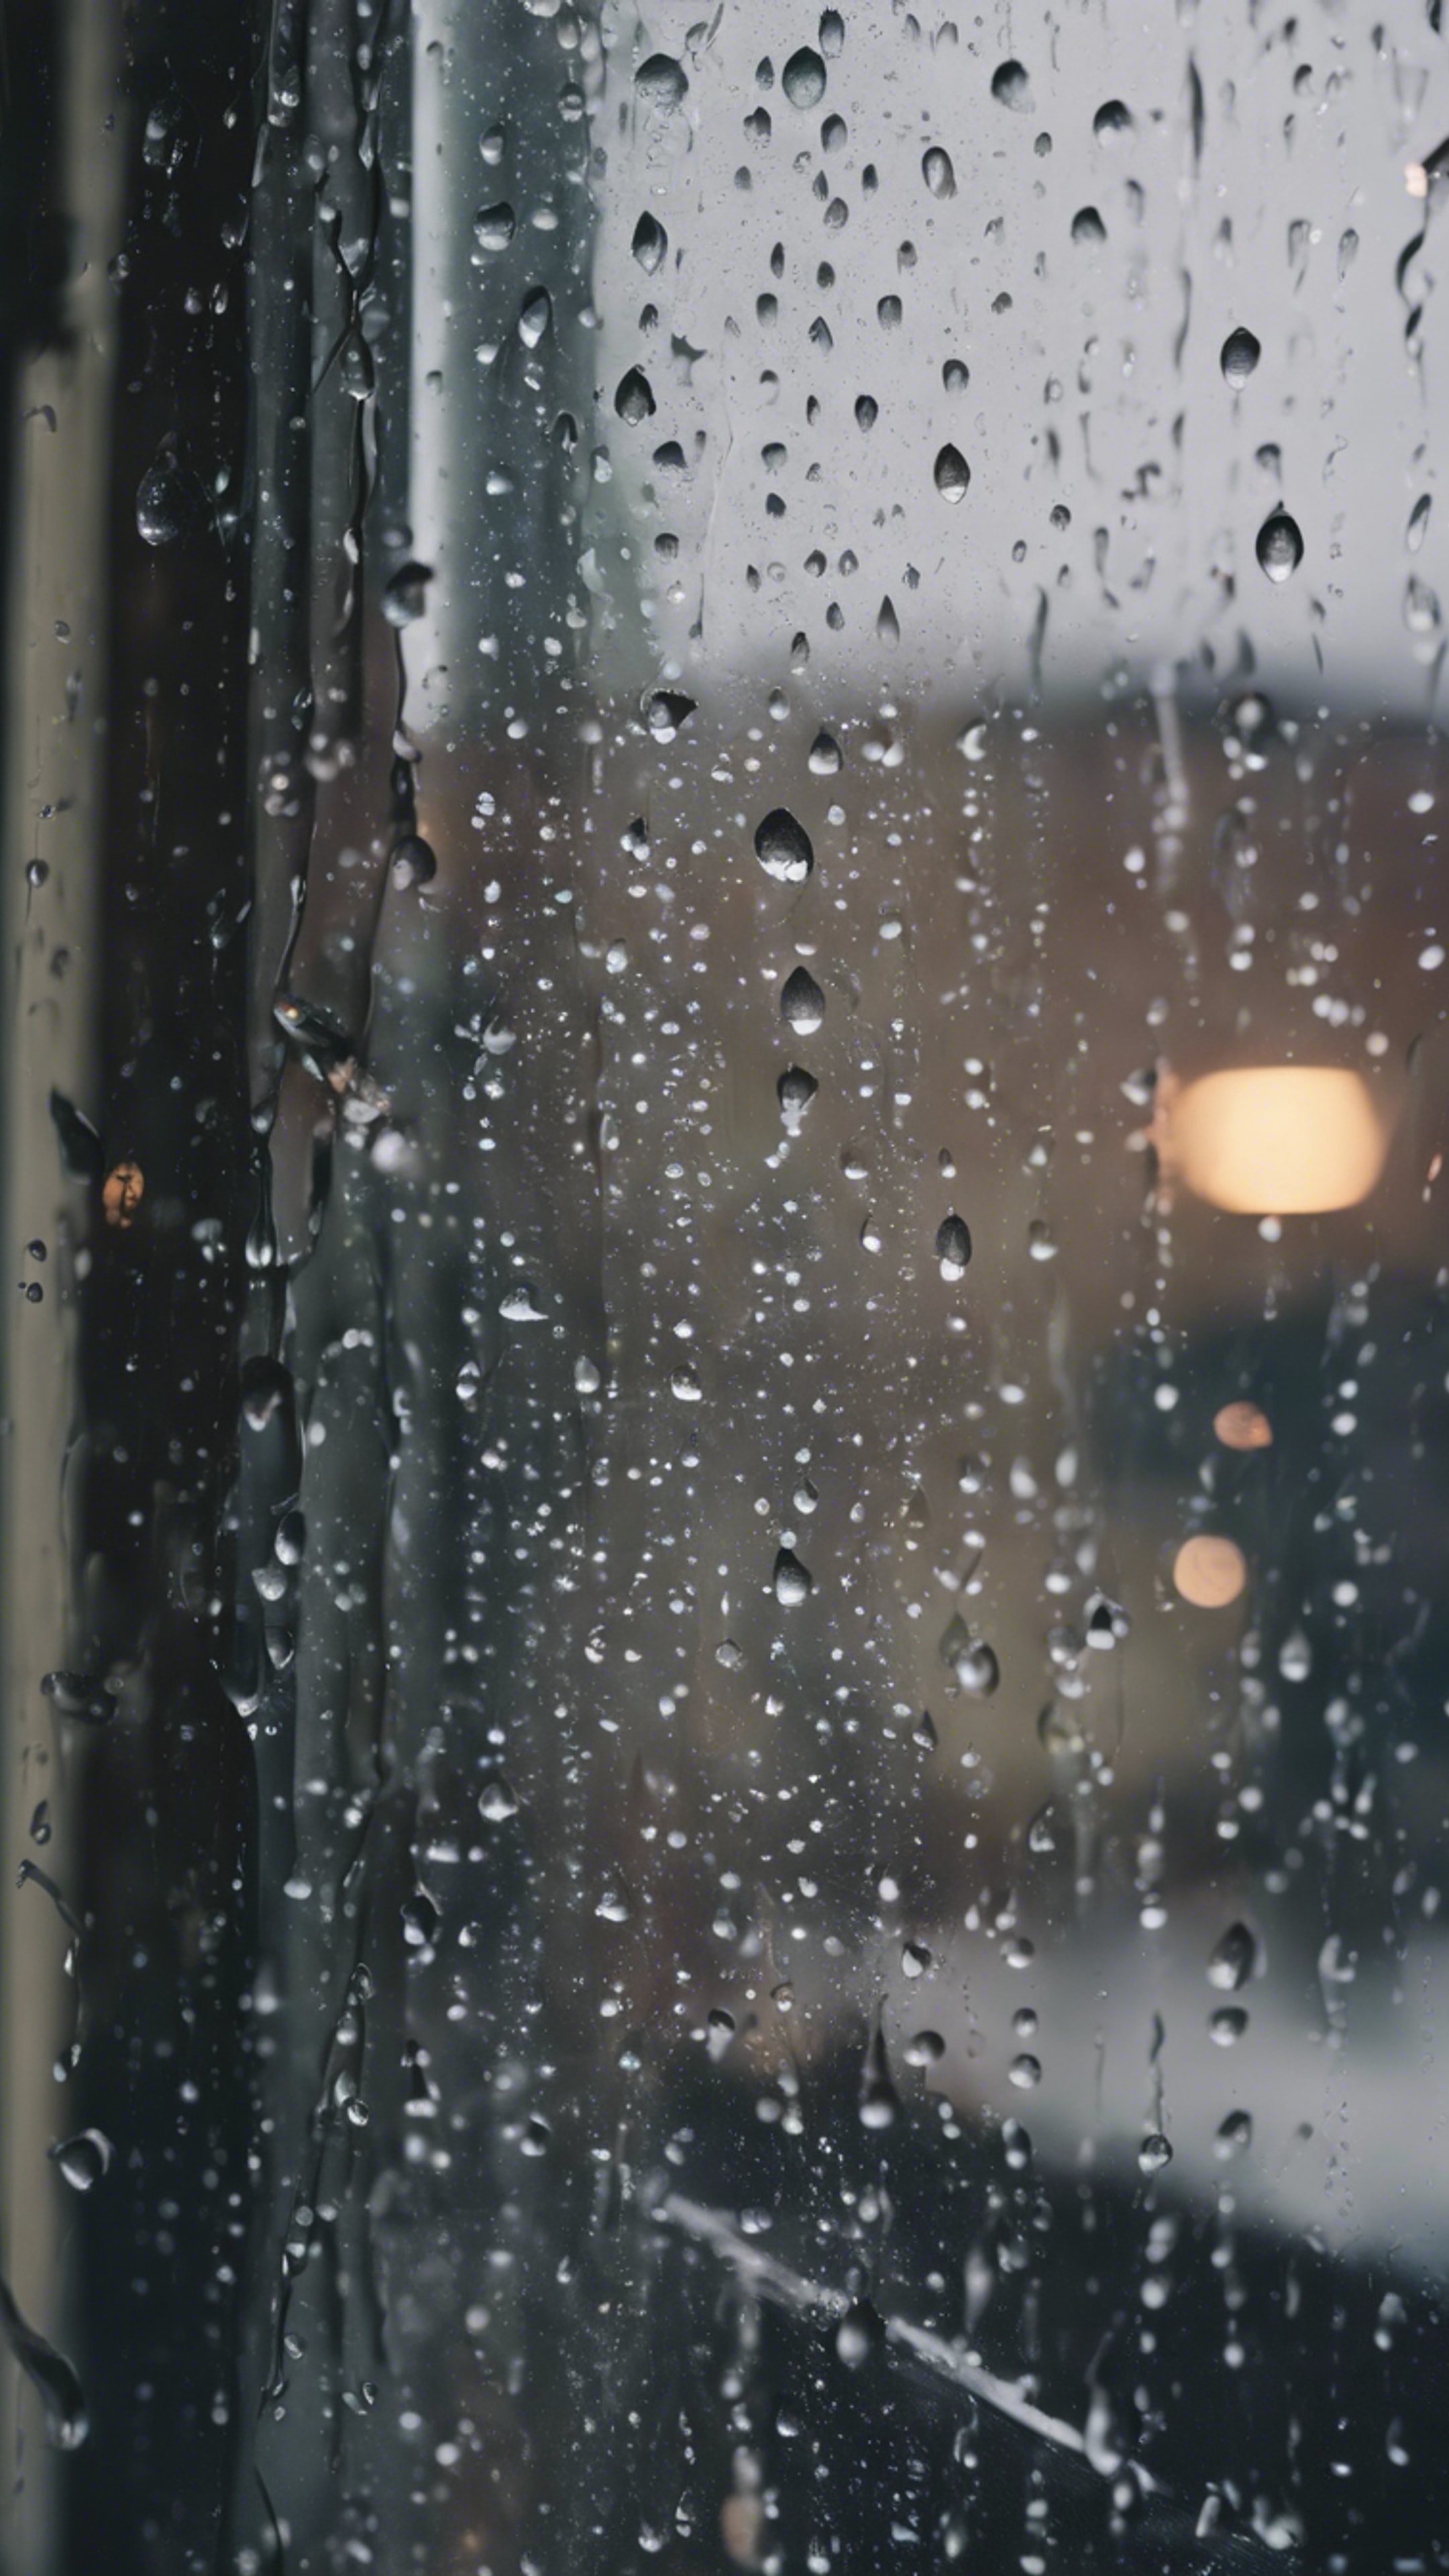 A heavy rainstorm viewed through a window, the droplets streaking down the glass ورق الجدران[548369da7c5b4ee9bdb0]